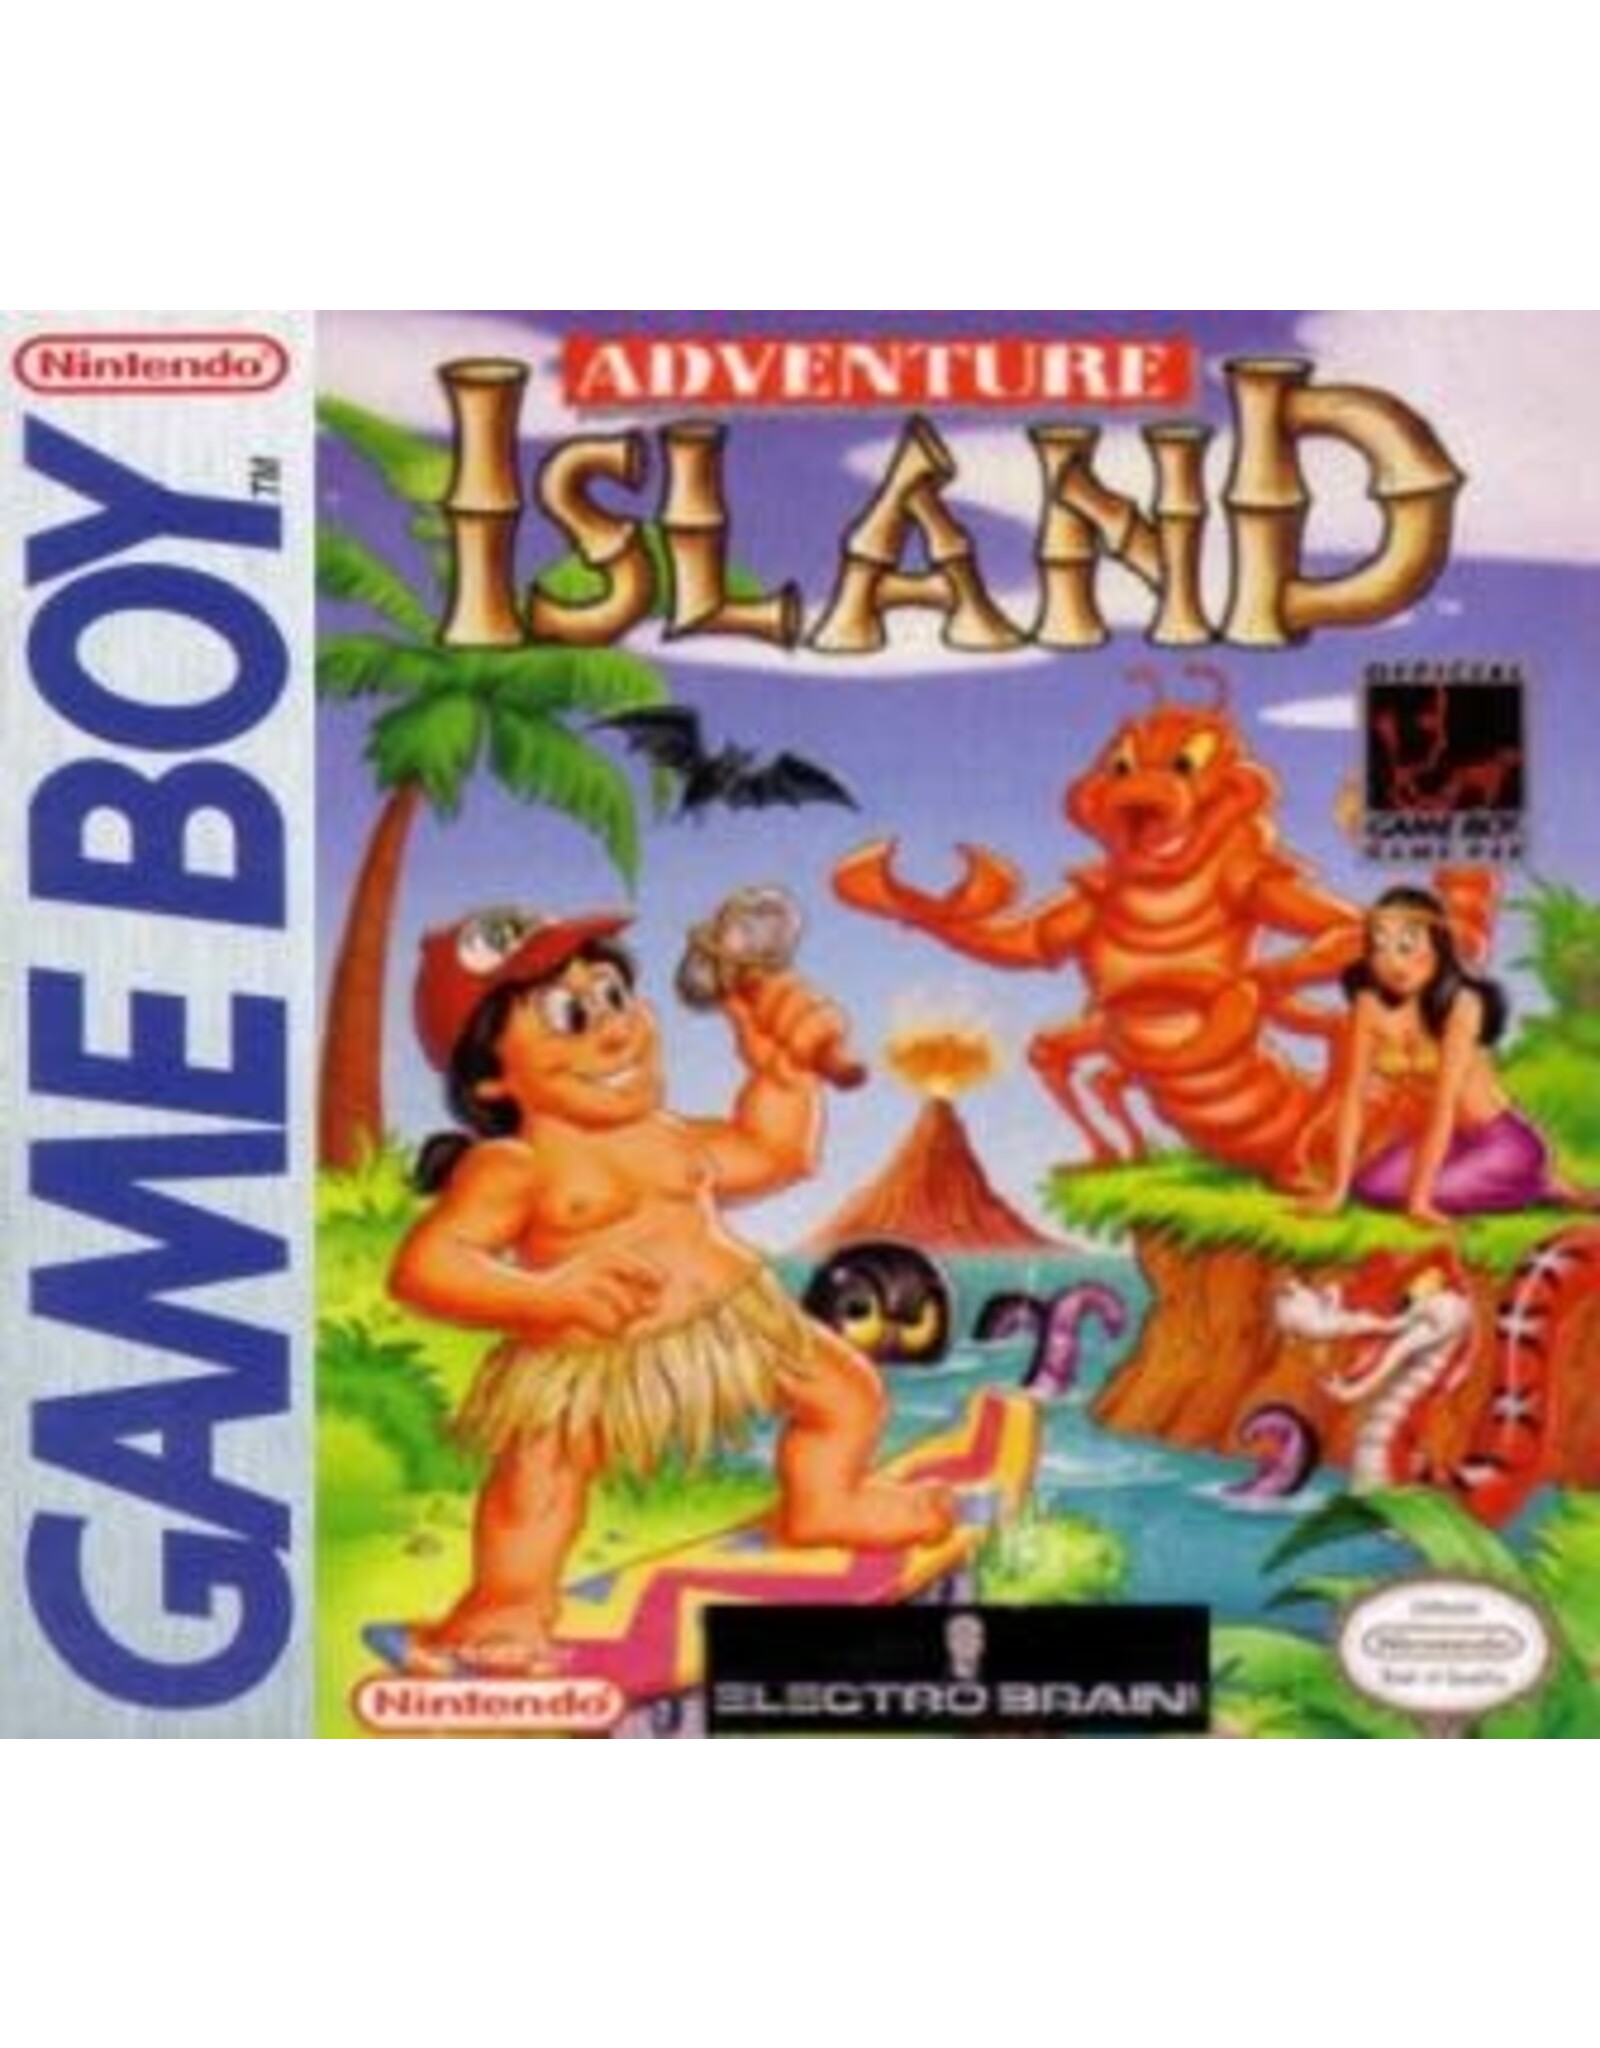 Game Boy Adventure Island (Cart Only)